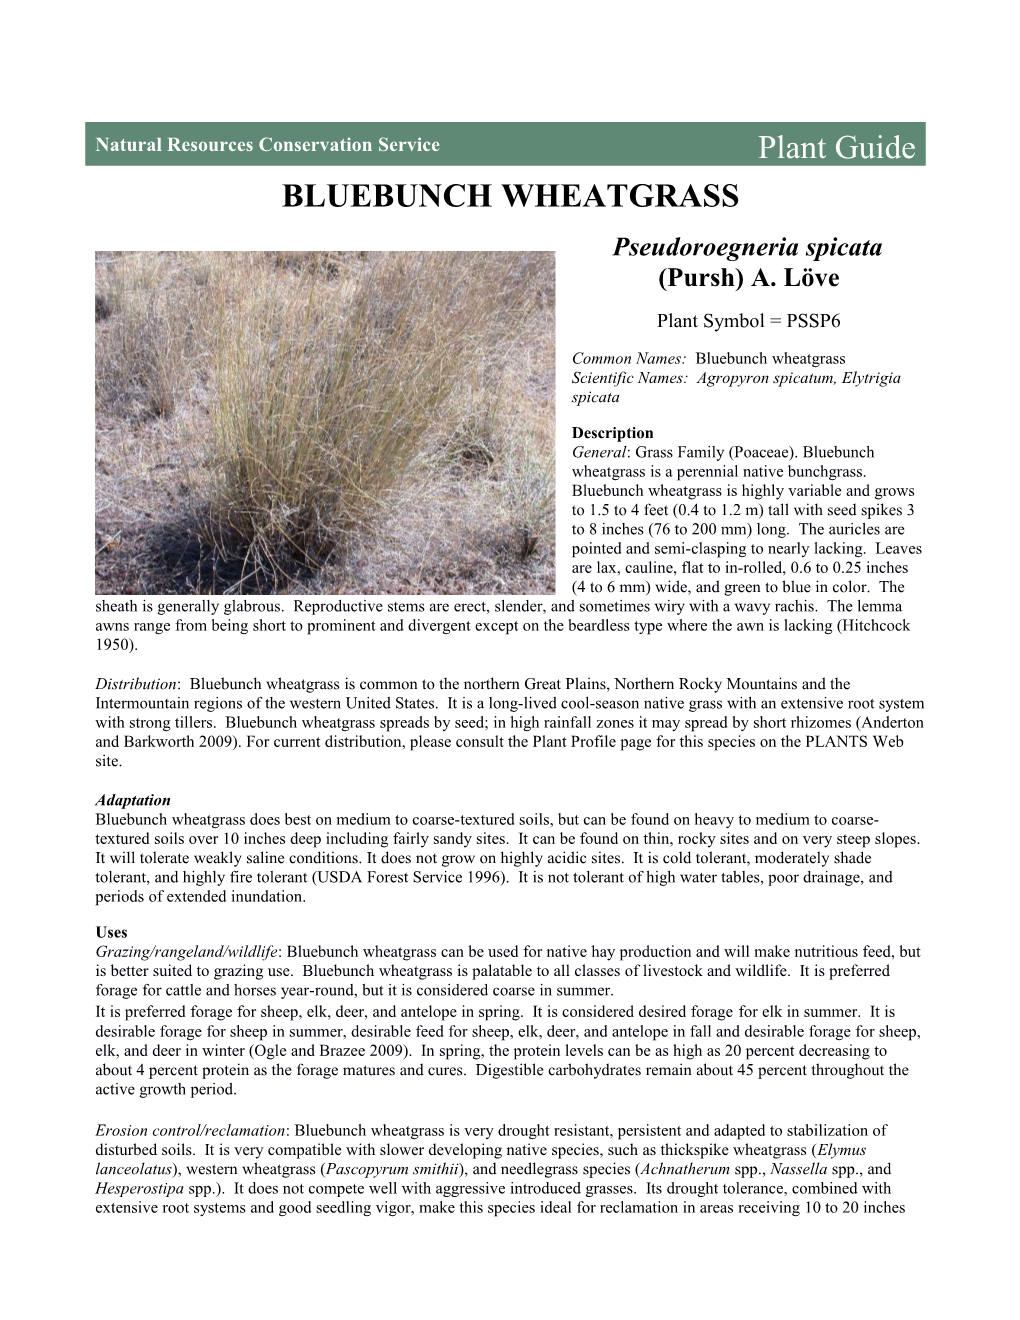 Plant Guide for Bluebunch Wheatgrass (Pseudoroegneria Spicata)